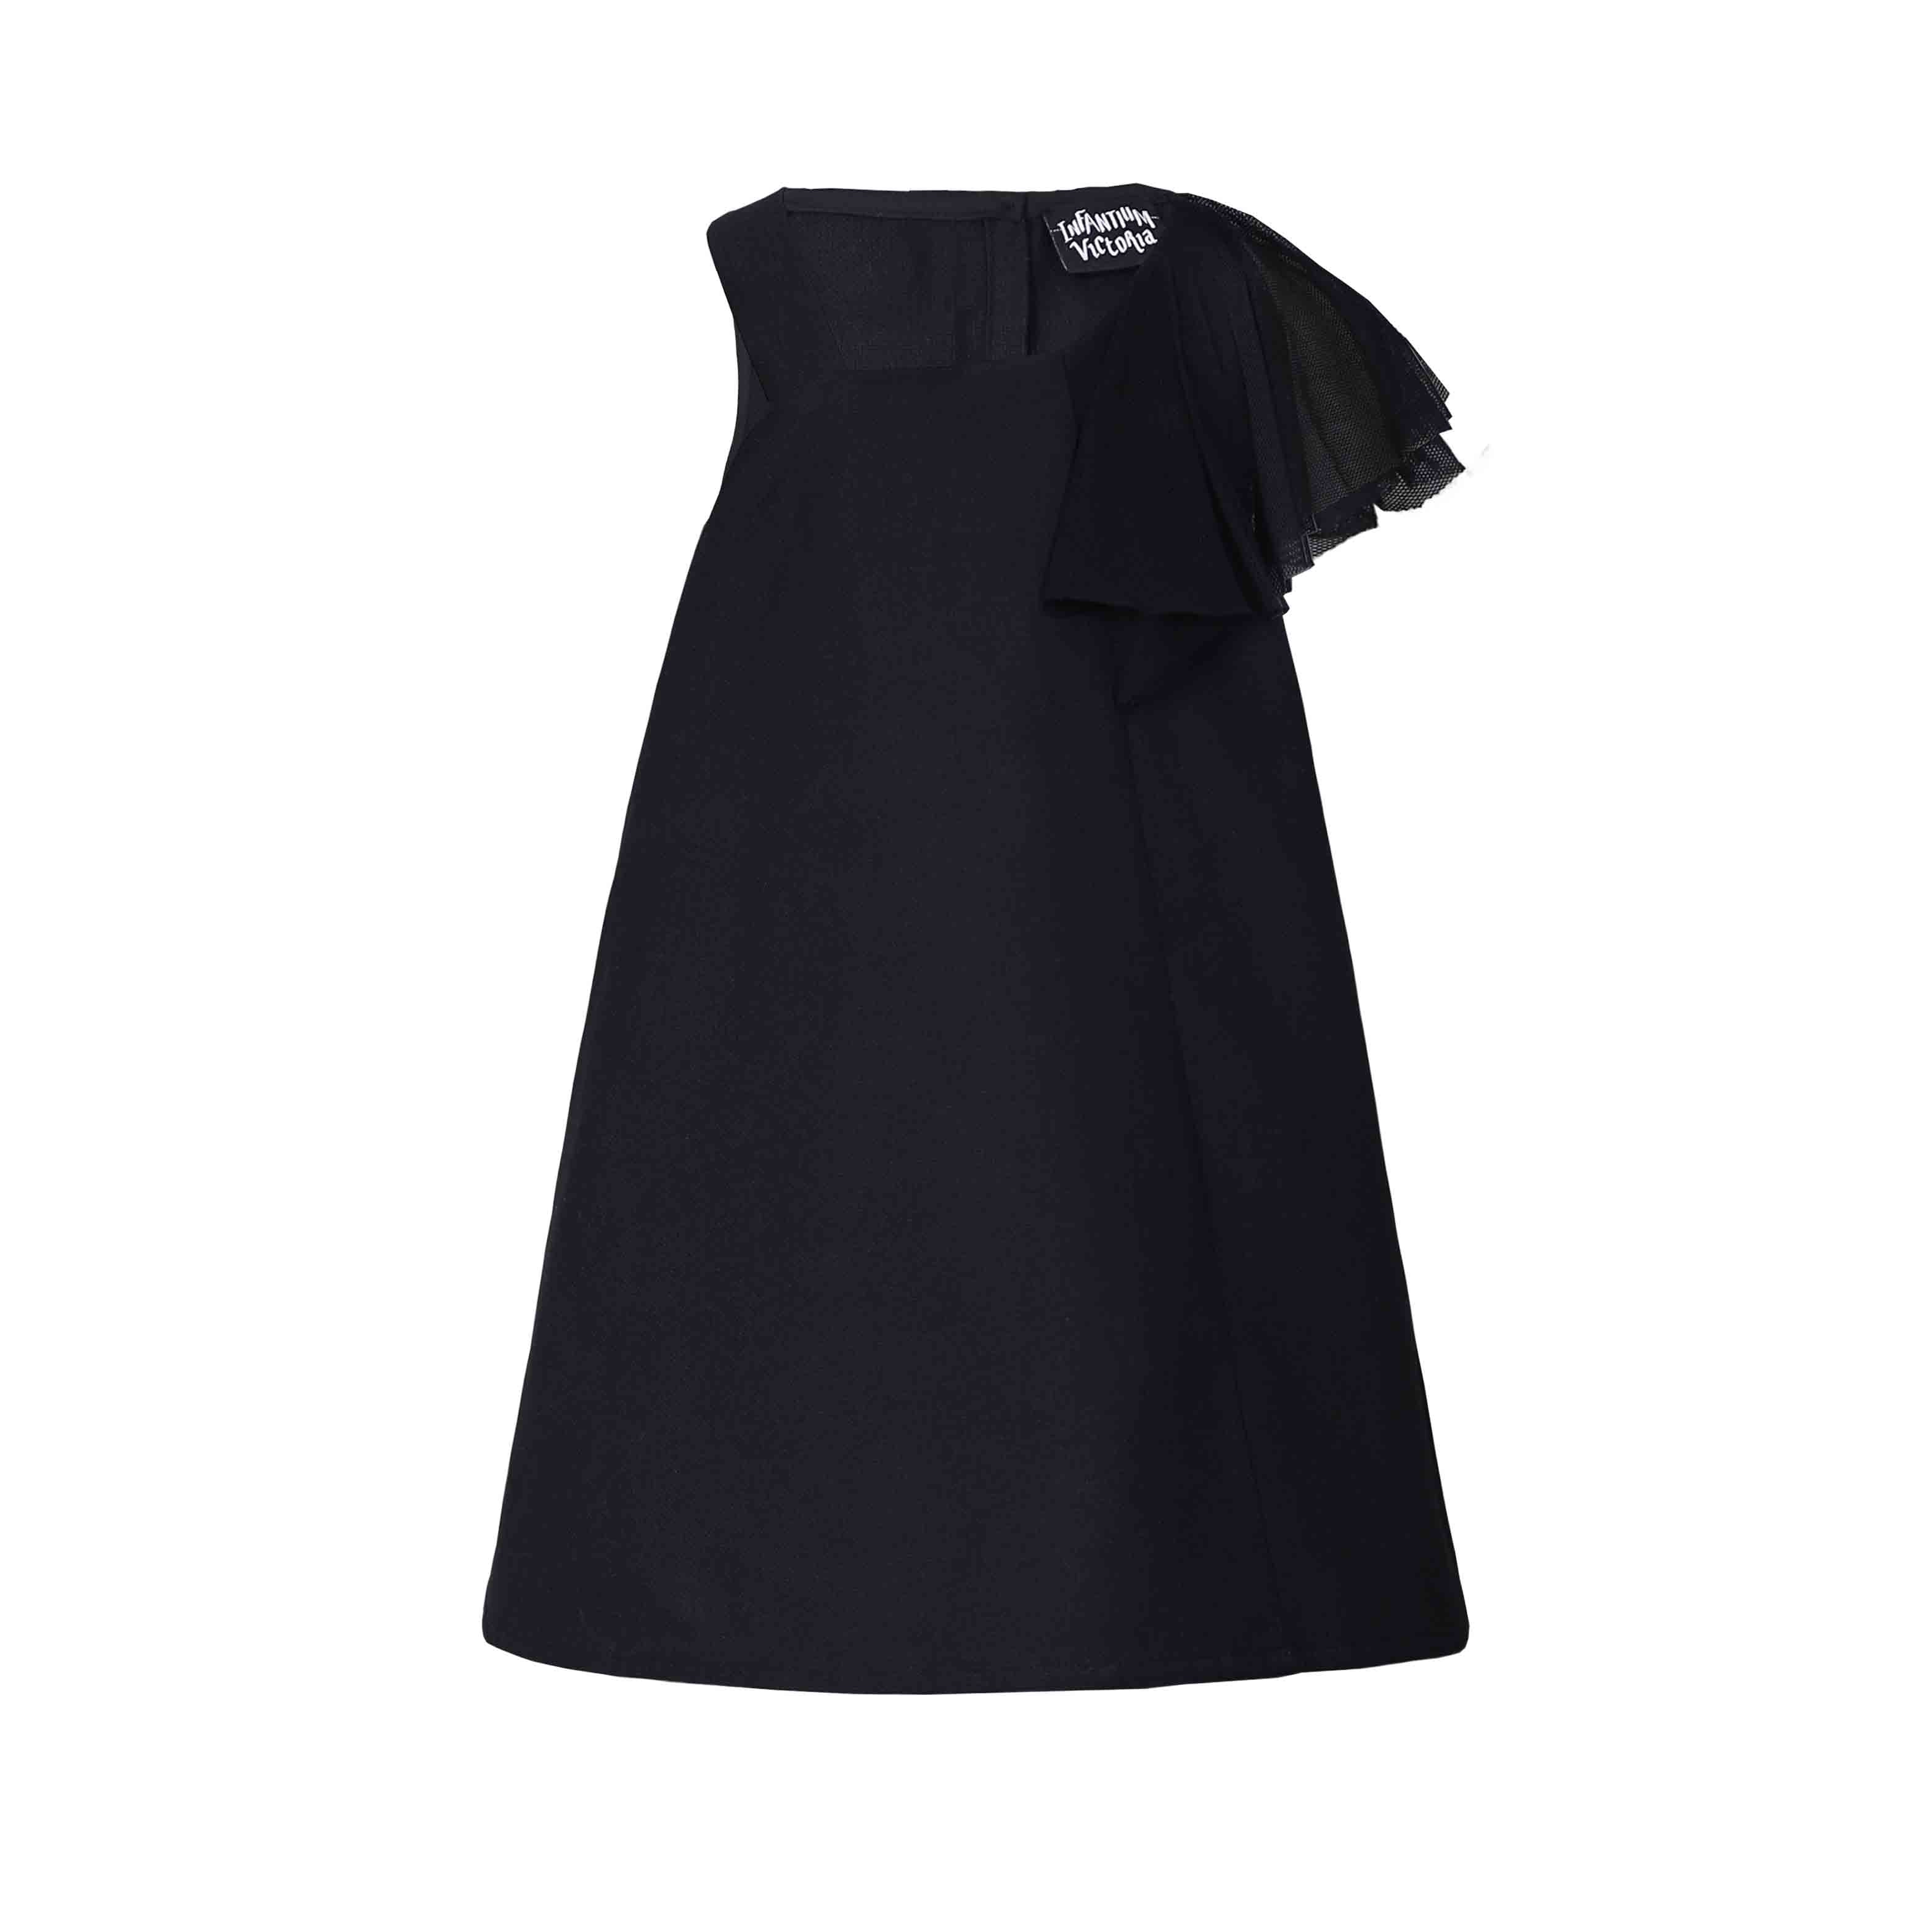 Black Dress for Girls | 100% Cotton Sustainable Vegan